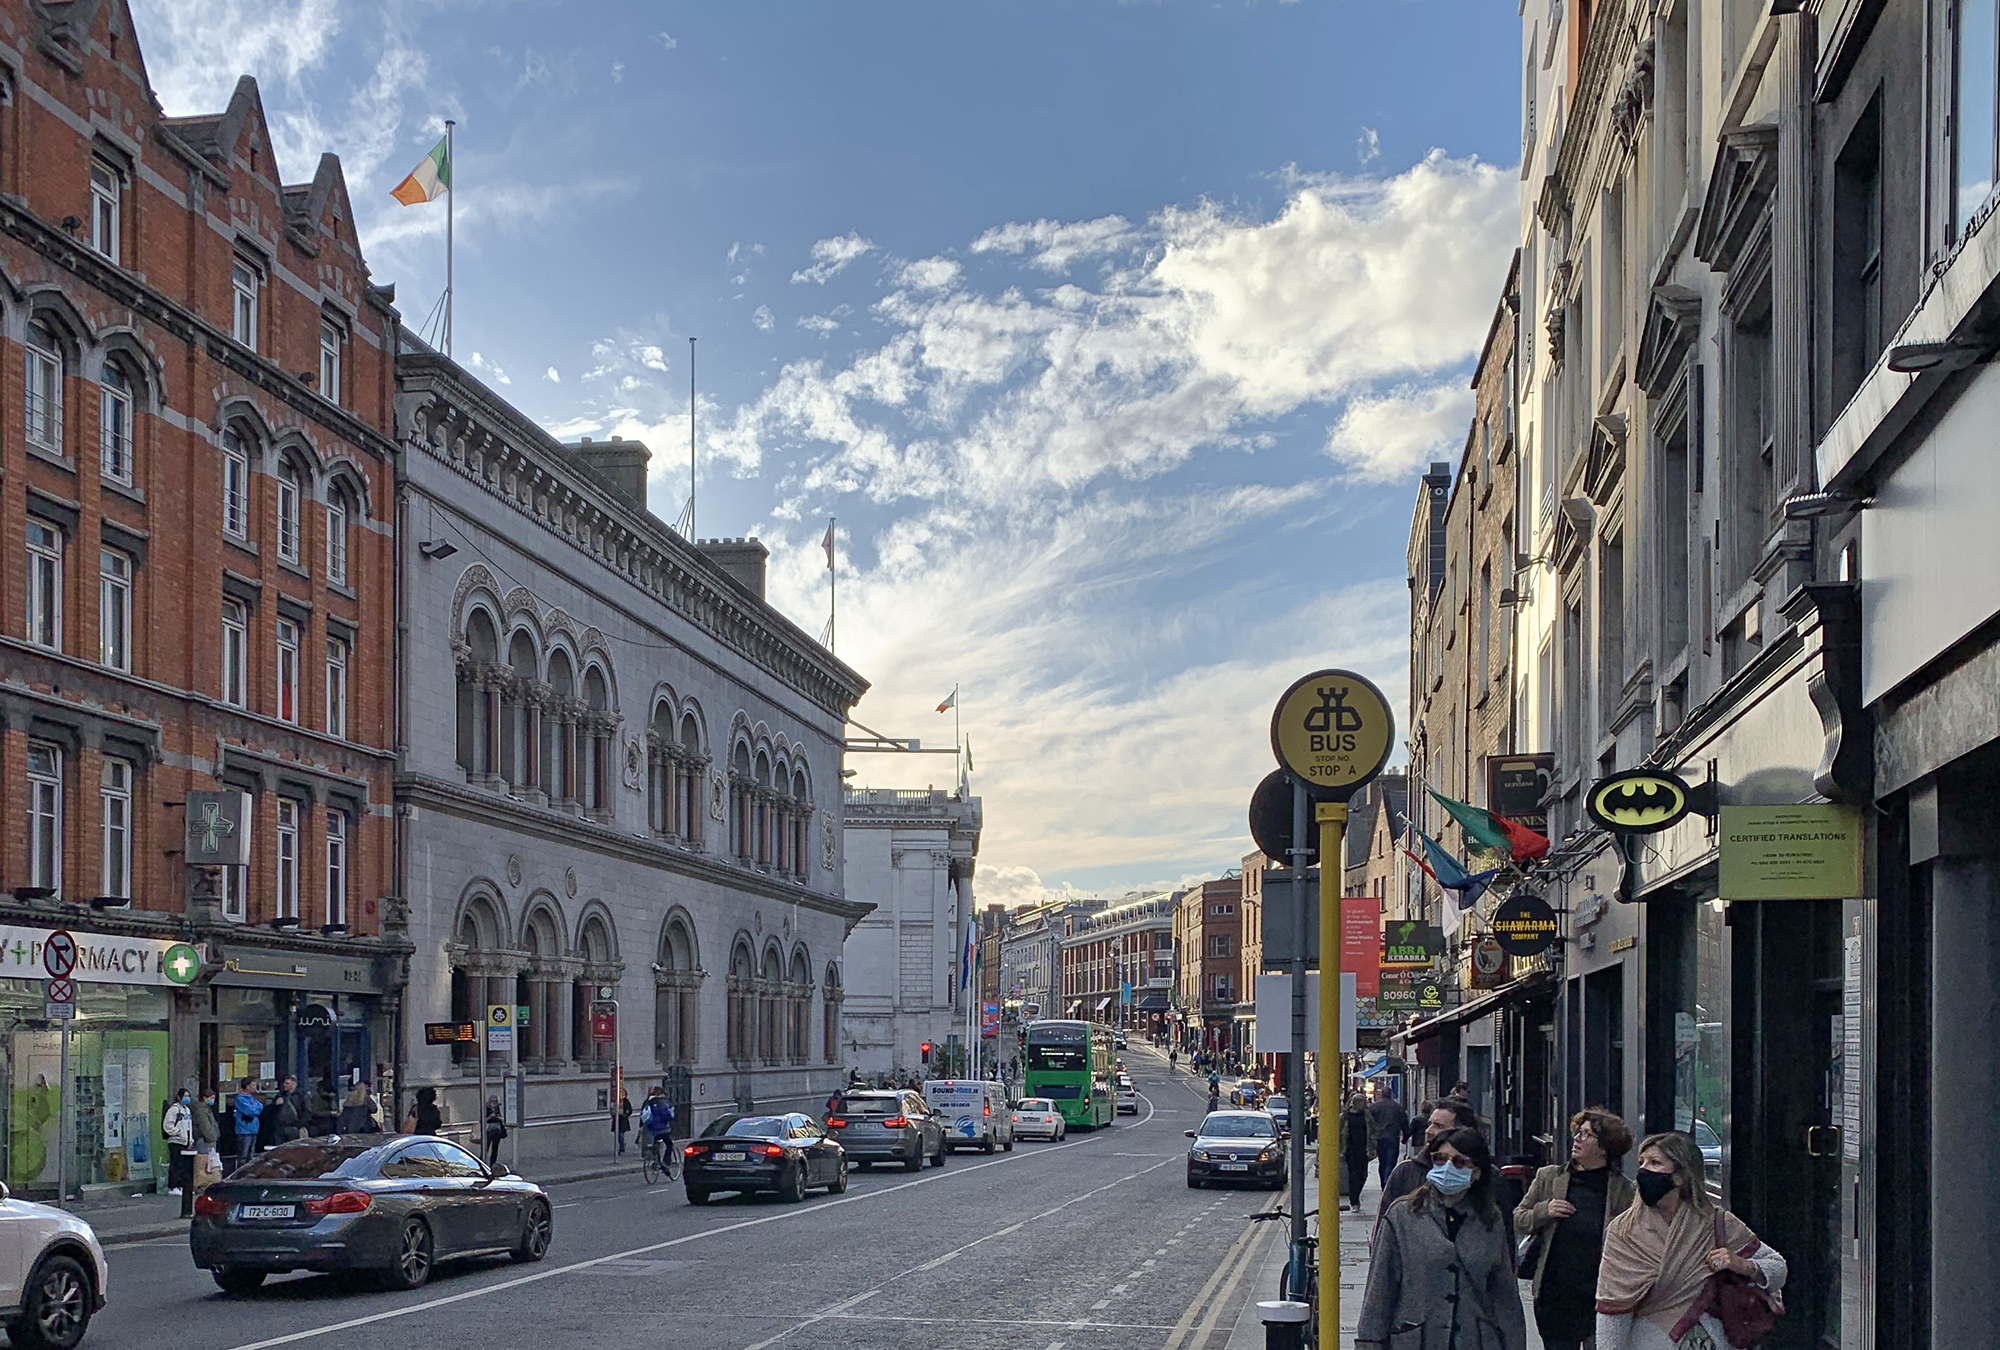 Arrival in Dublin